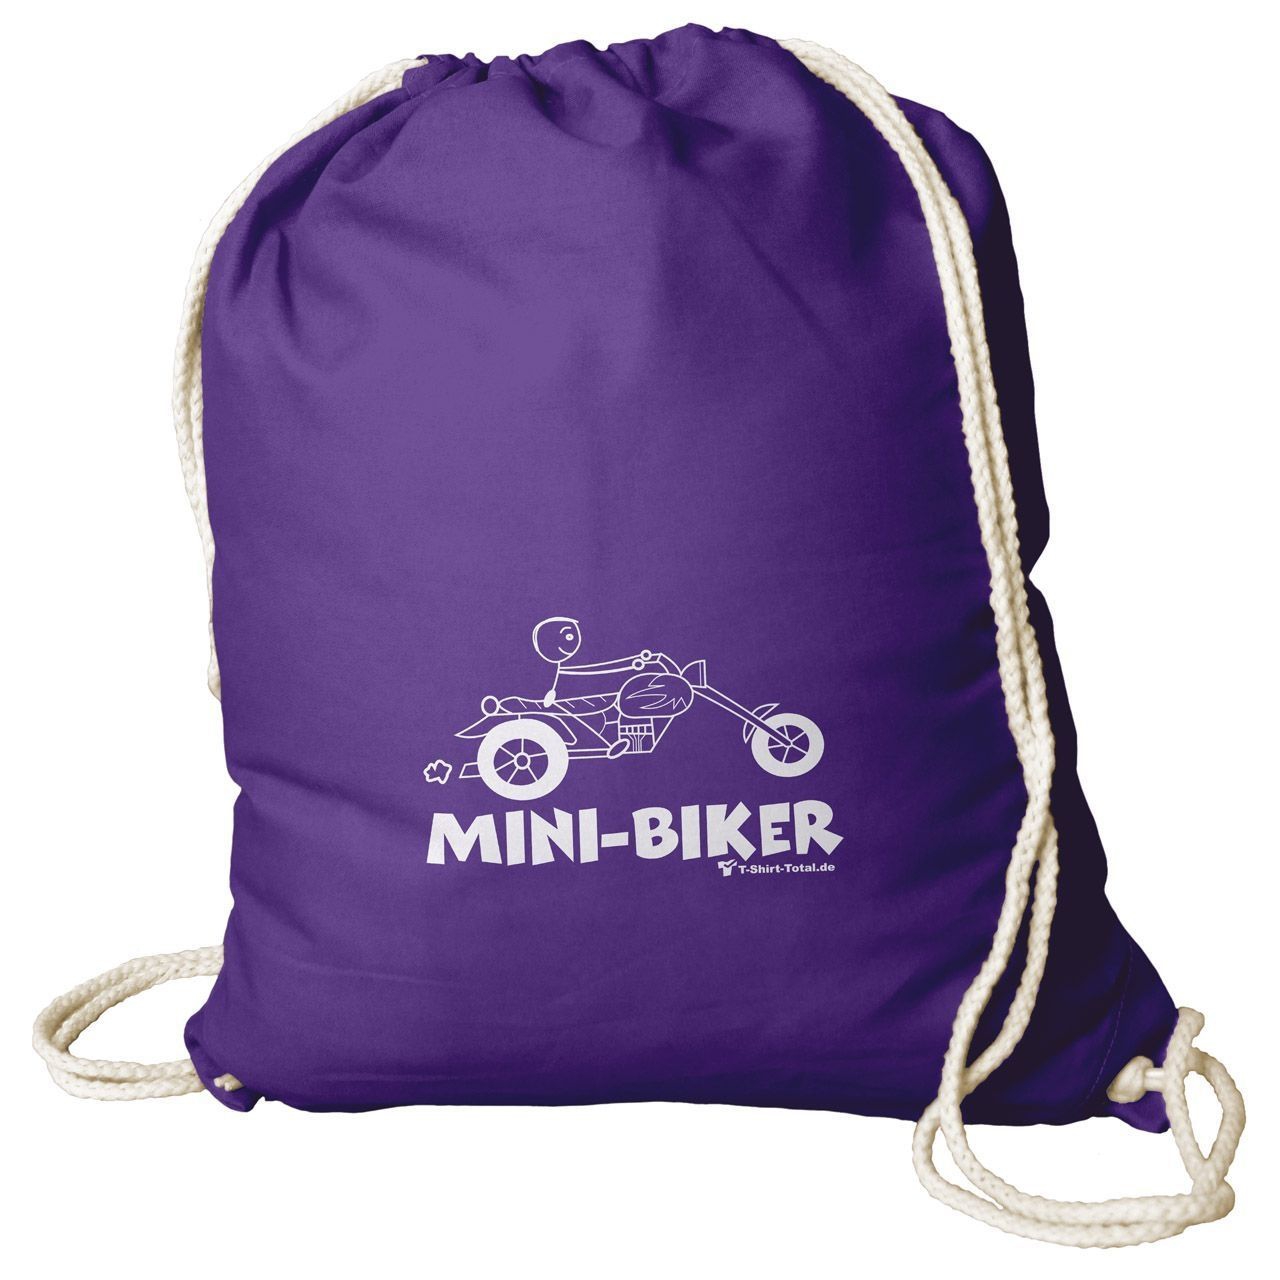 Mini Biker Rucksack Beutel lila